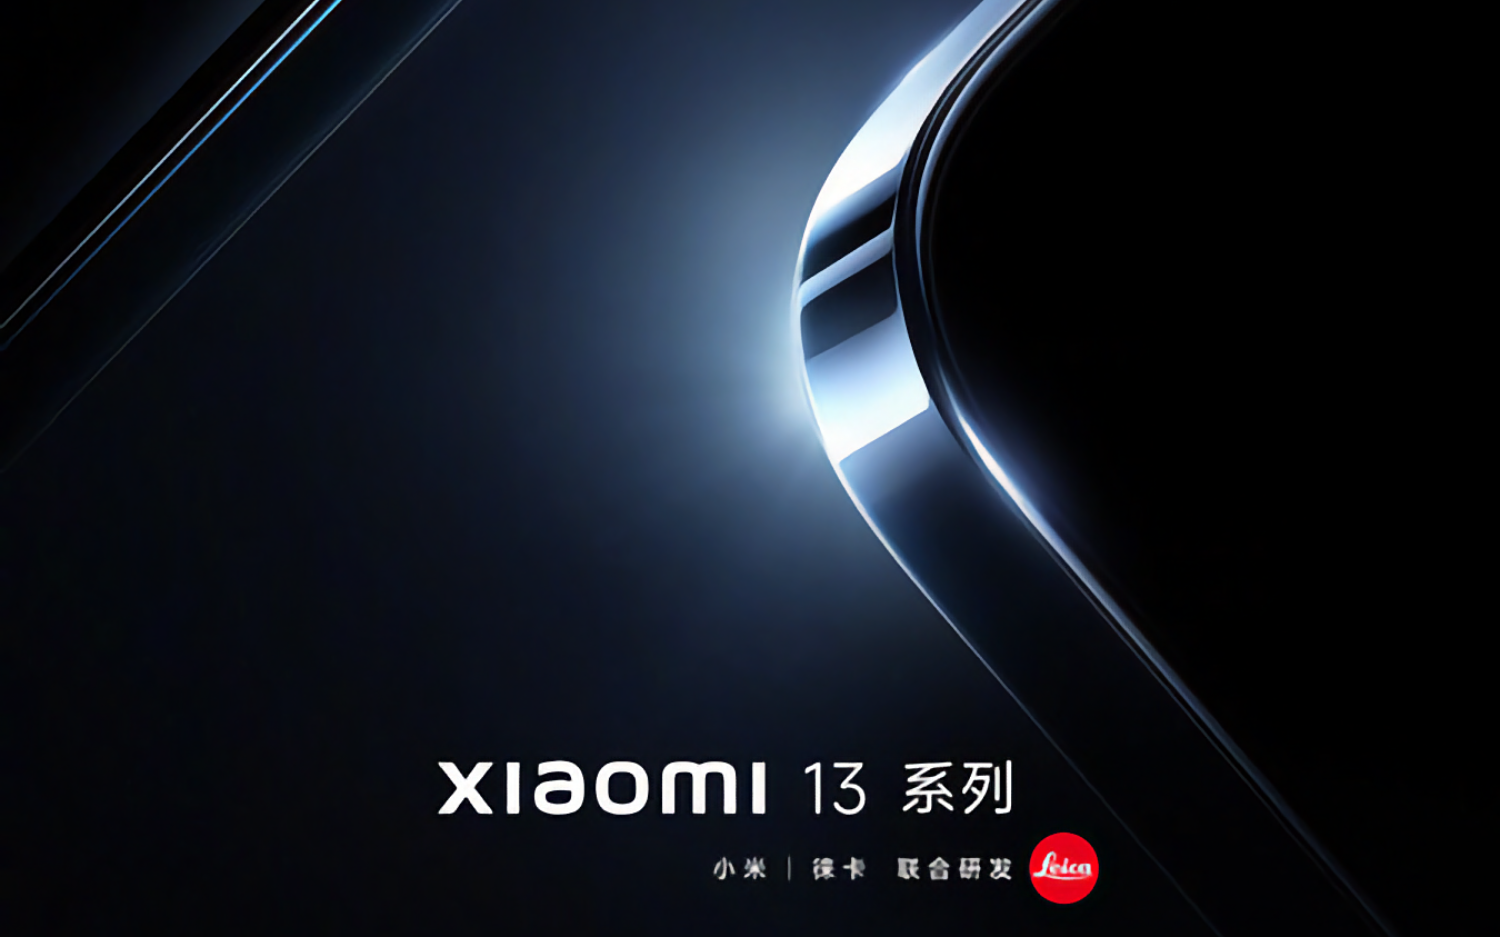 Xiaomi раскрыла дату презентации флагманских Xiaomi 13 и долгожданной MIUI 14